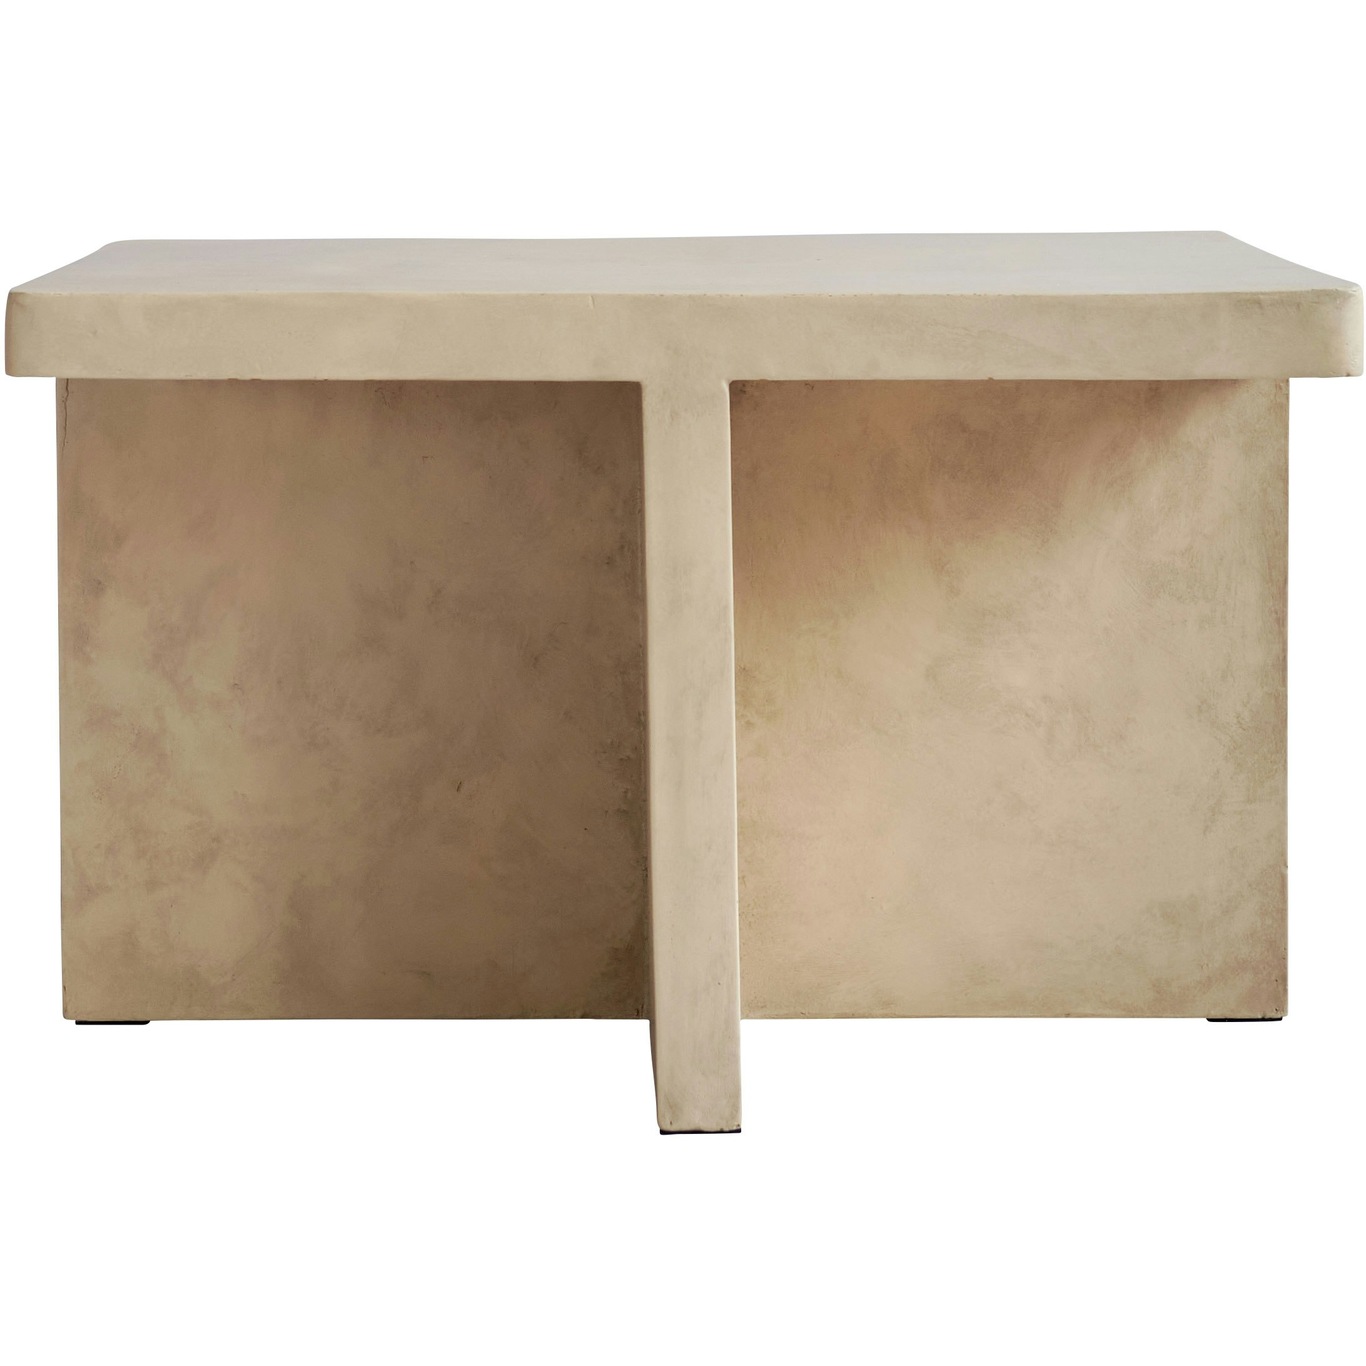 Brutus Coffee Table 60x60 cm, Sand